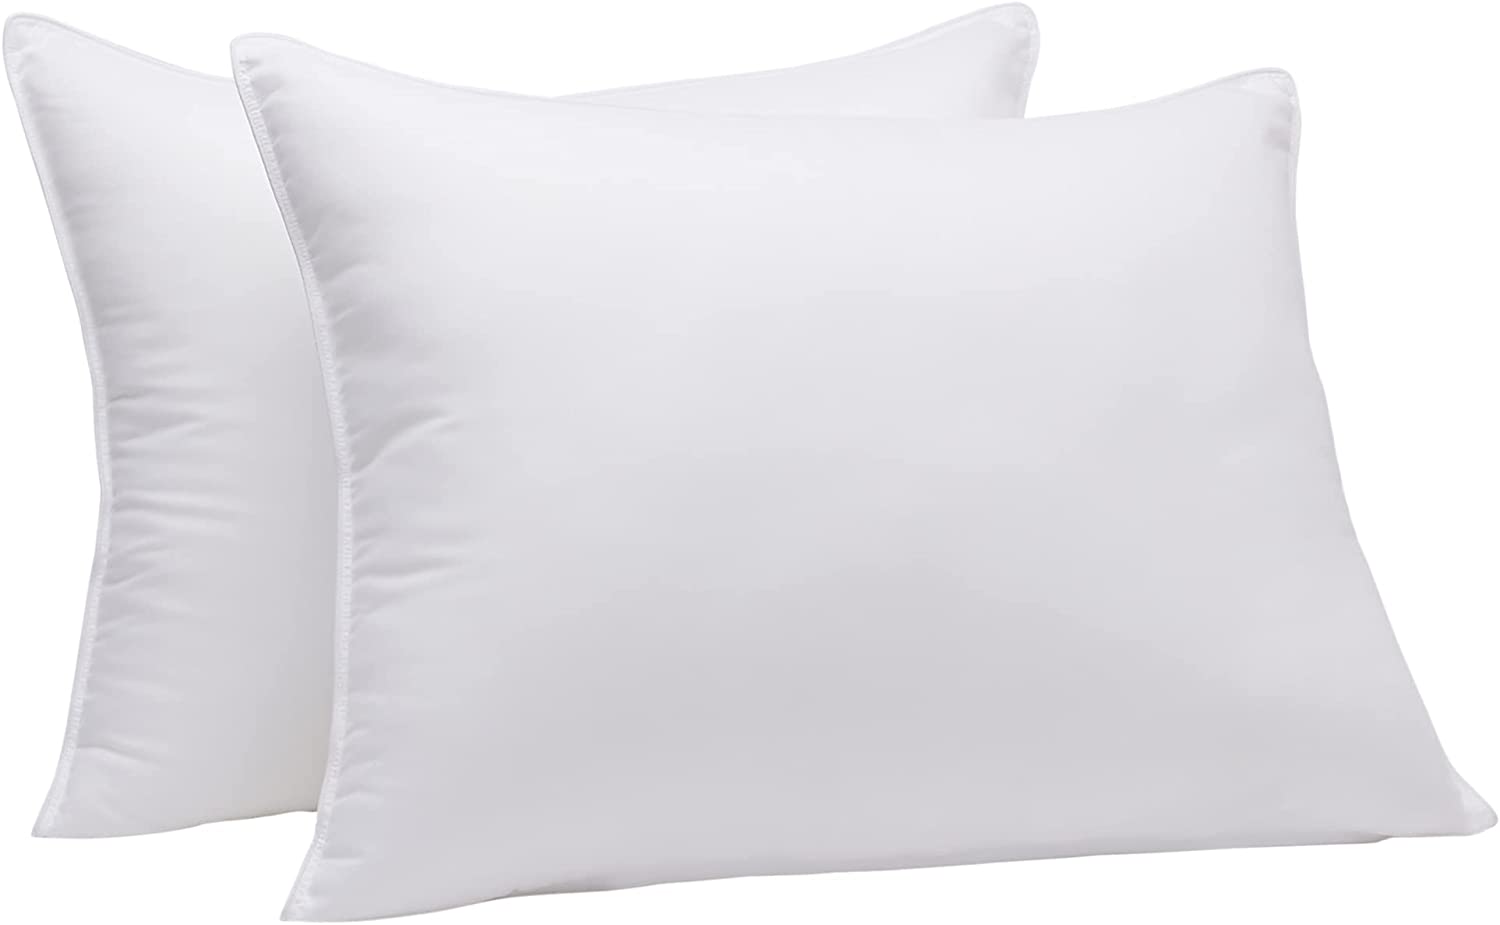 Amazon Basics Down-Alternative Pillow